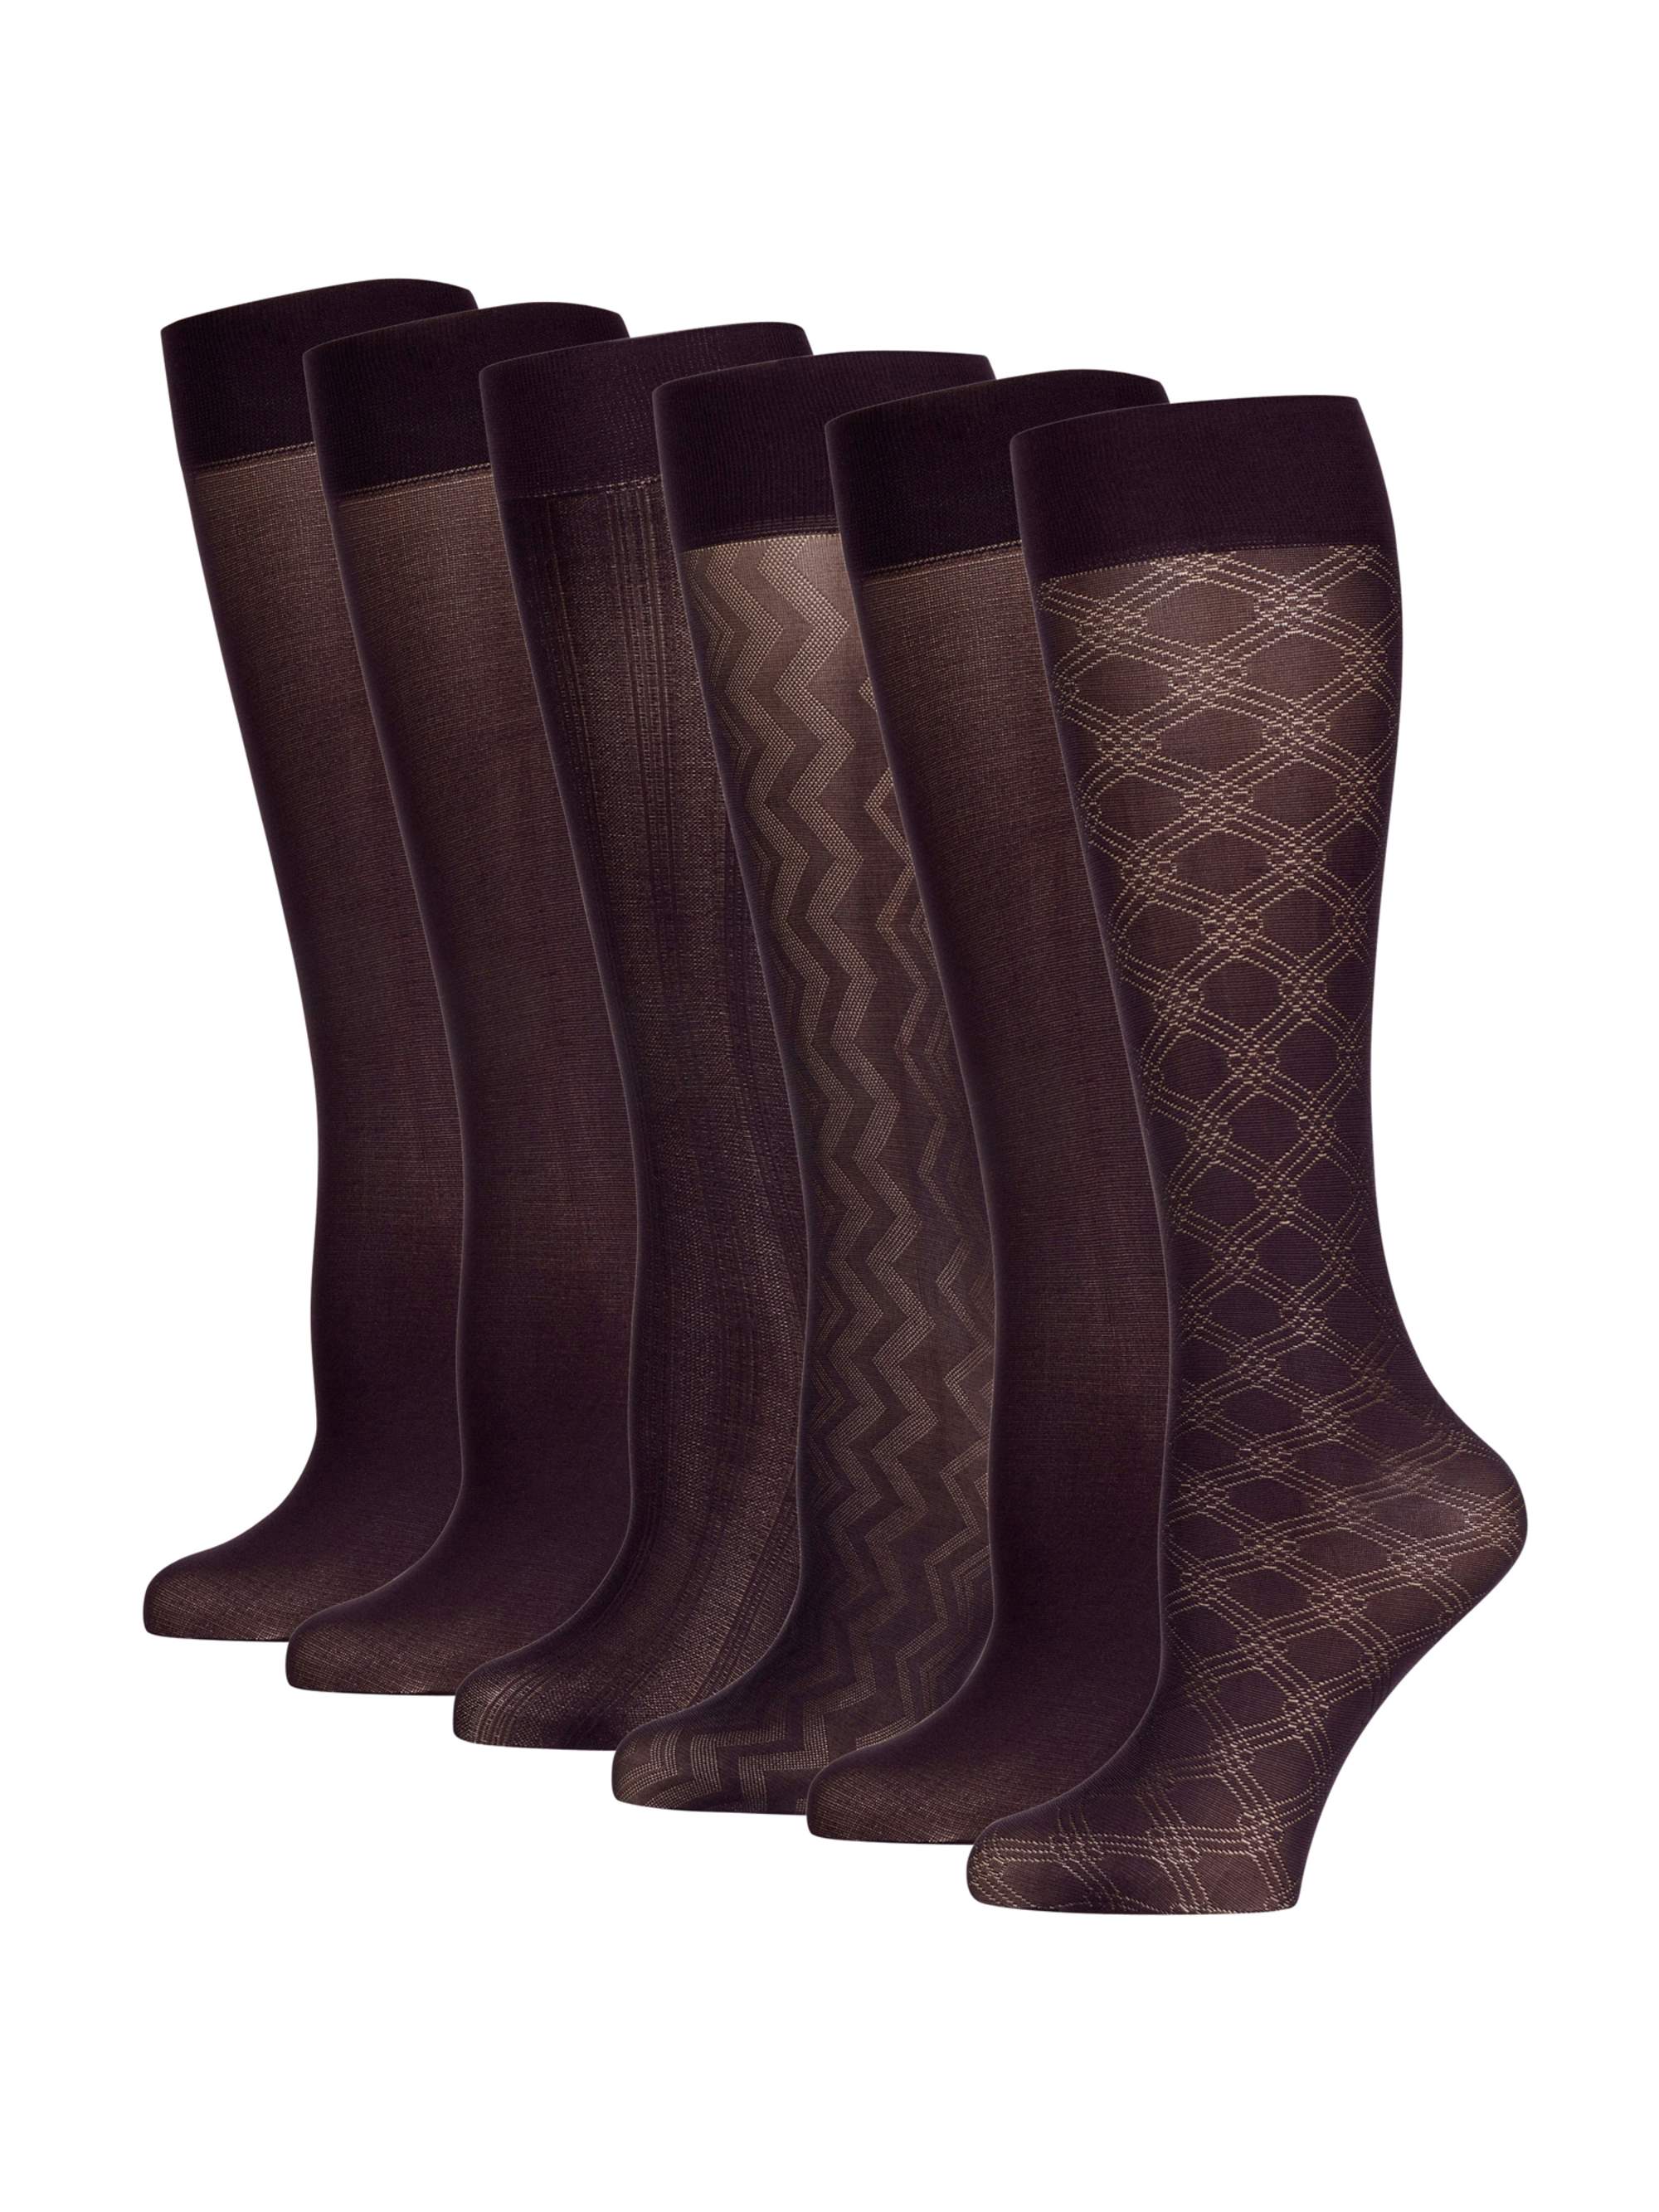 PEDS - Ladies Interlinks Trouser Socks, 6 Pairs - Walmart.com - Walmart.com